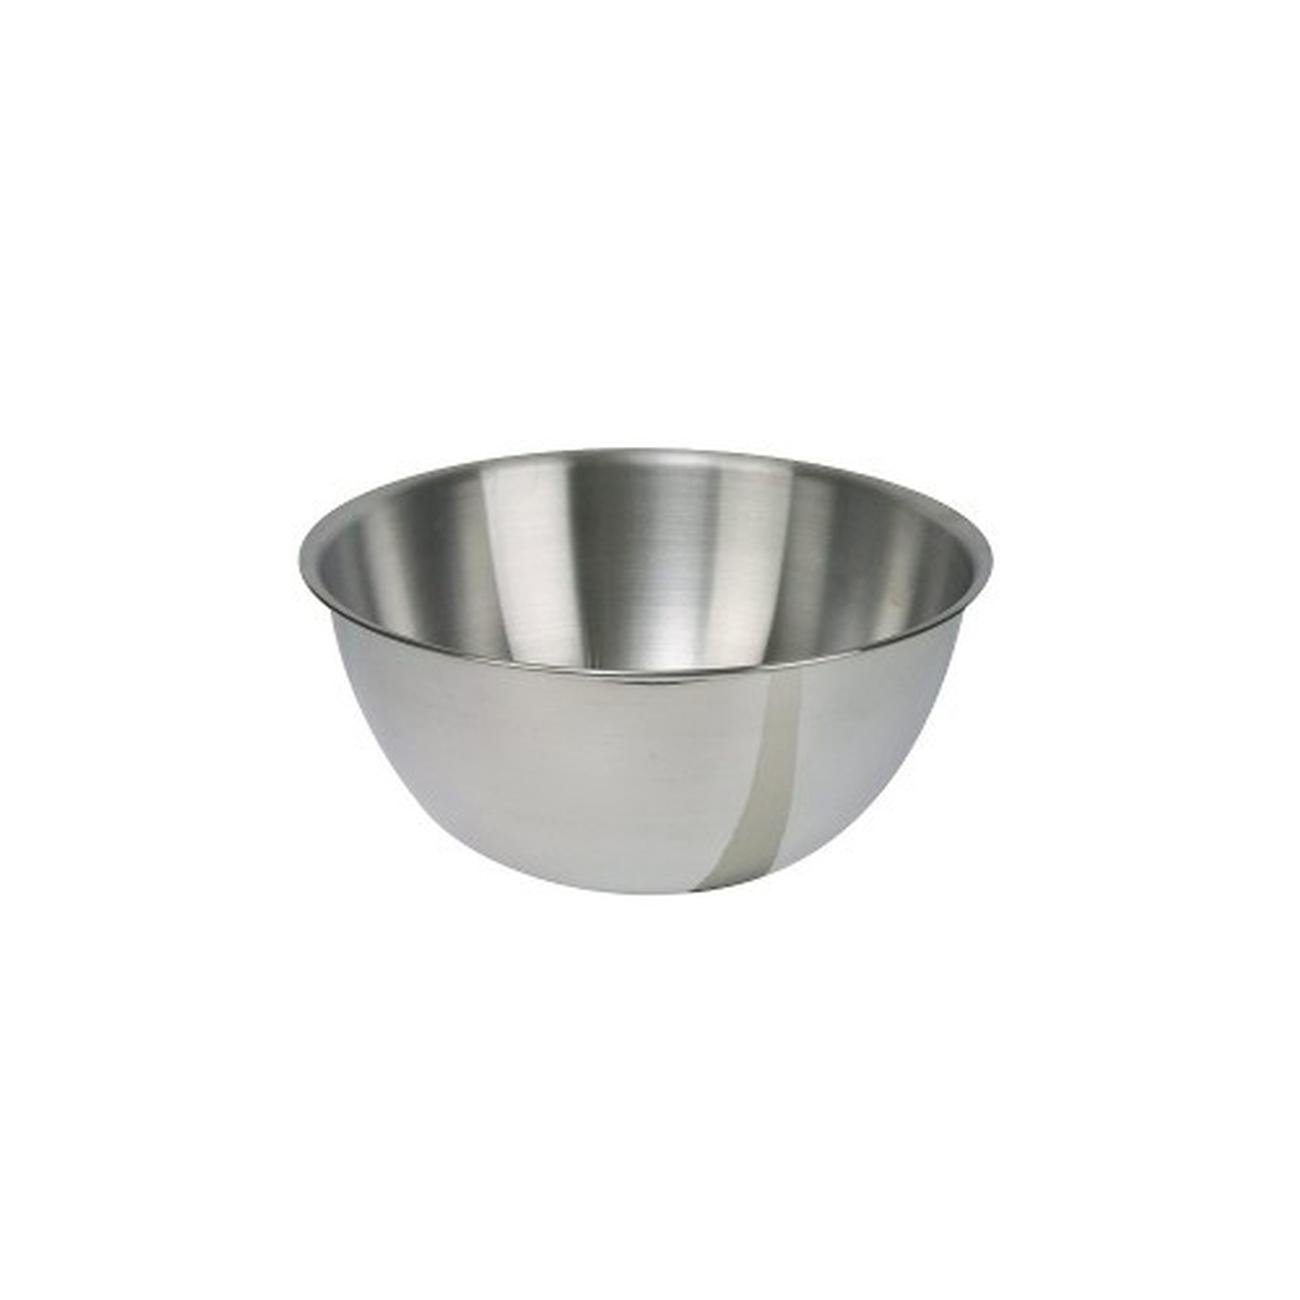 dexam-stainless-steel-mixing-bowl-0-5l - Dexam Stainless Steel Mixing Bowl 500ml